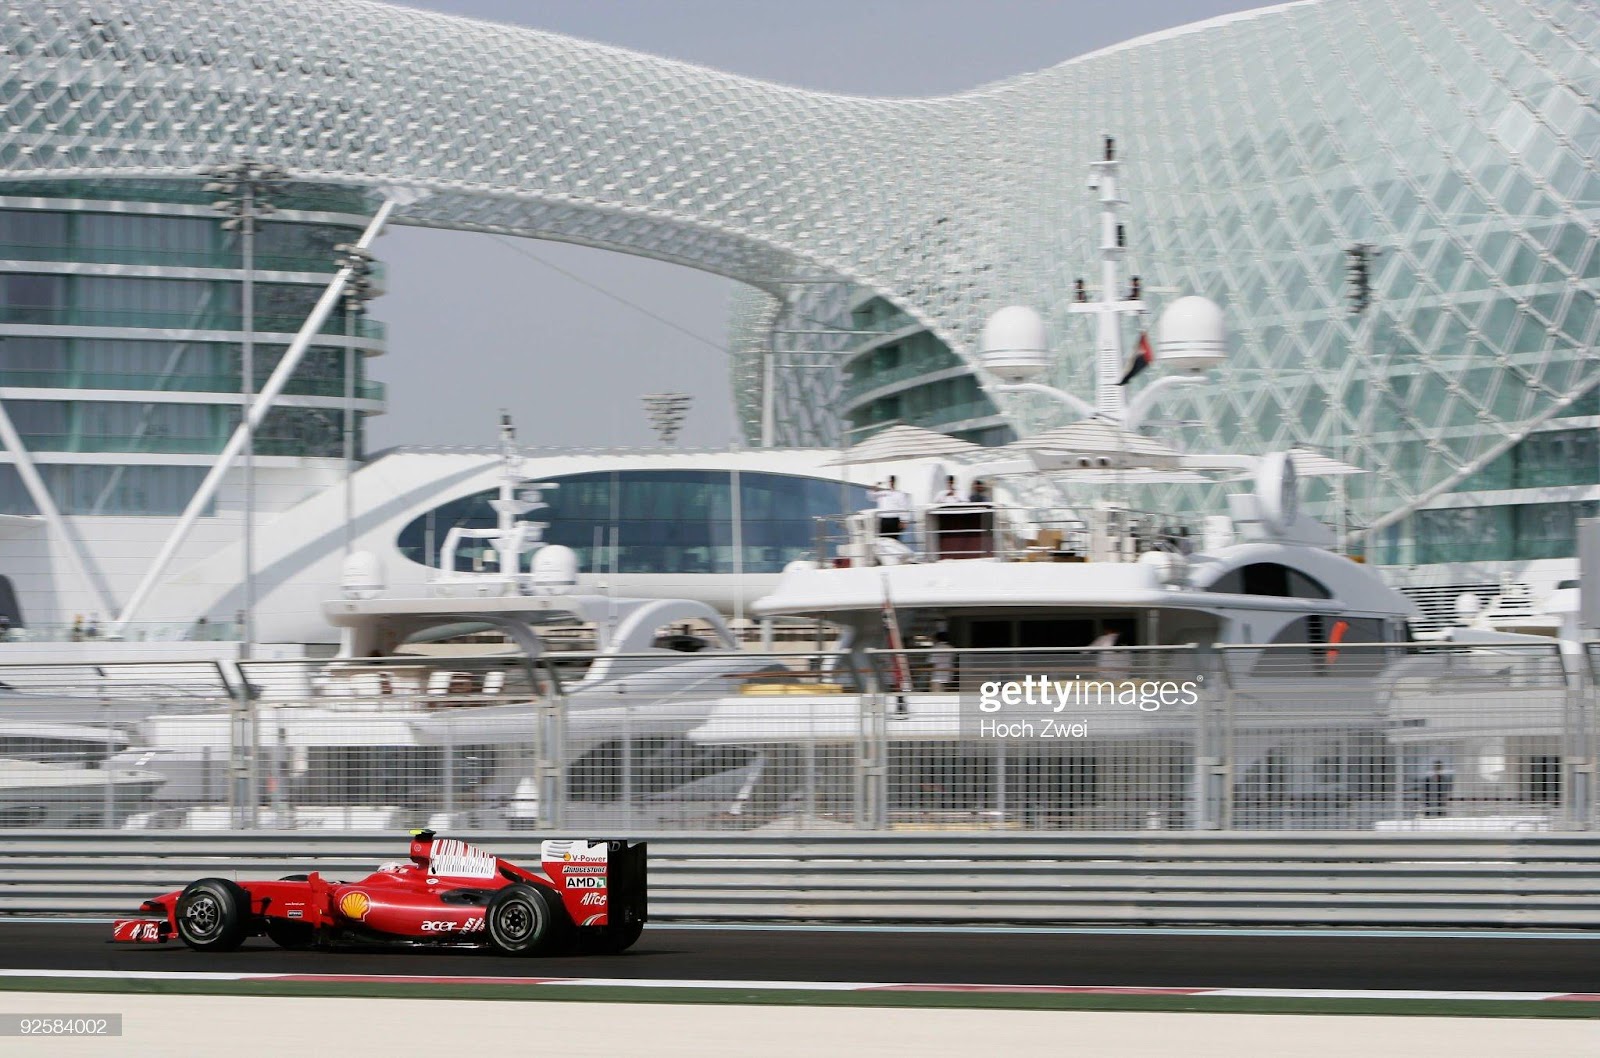 Kimi Raikkonen, Ferrari, drives during qualifying for the Abu Dhabi F1 Grand Prix at the Yas Marina Circuit on October 31, 2009 in Abu Dhabi, United Arab Emirates.